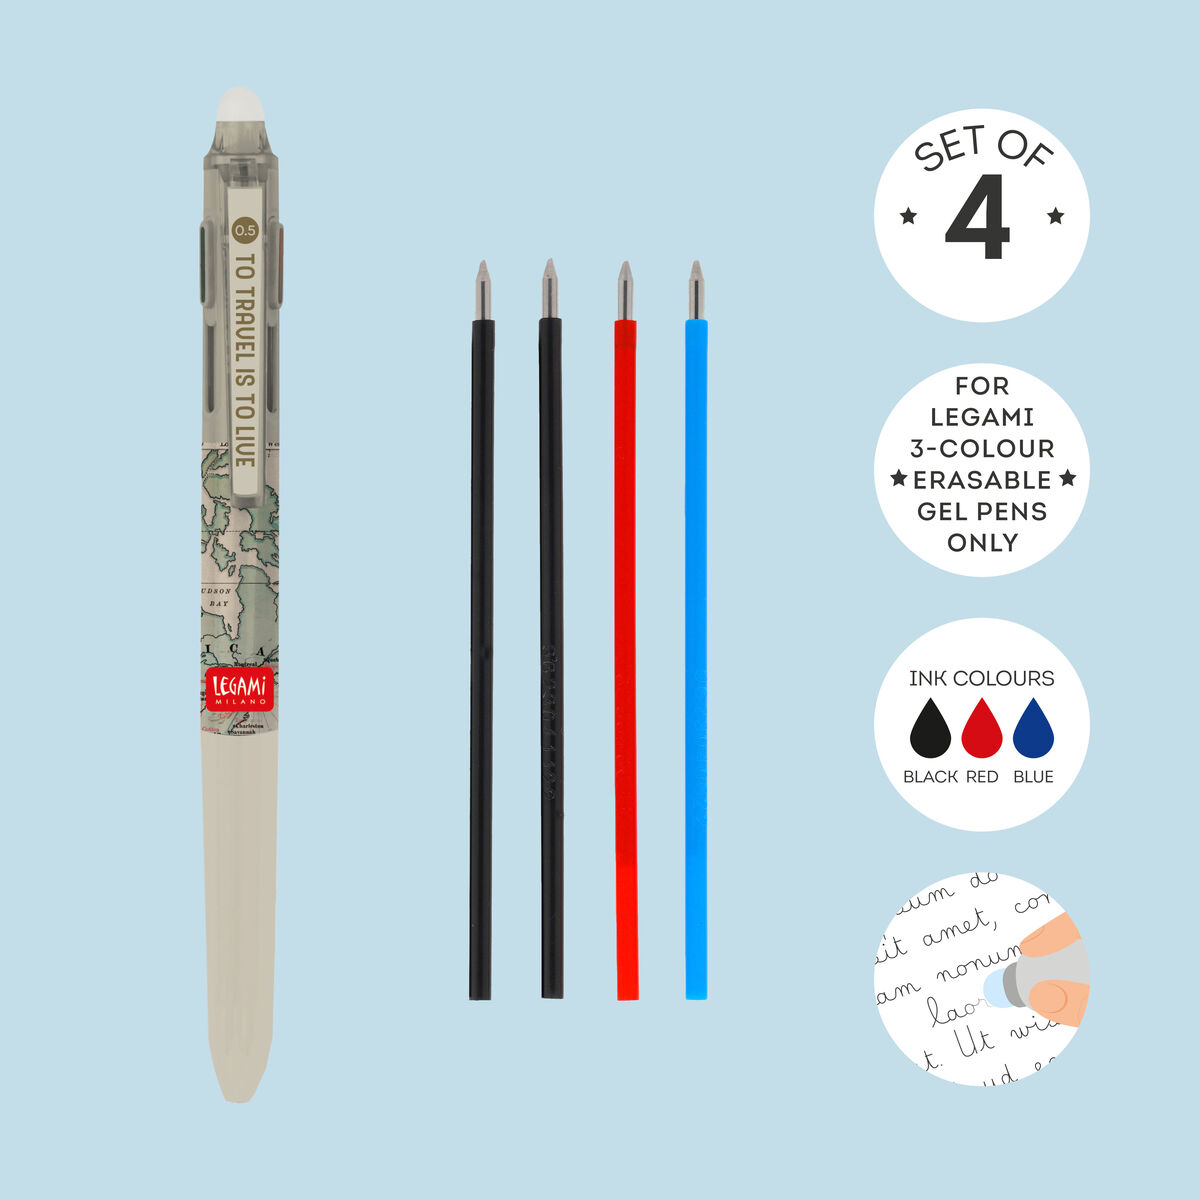 LEGAMI Refill Set for 3-Colour Erasable Gel Pens